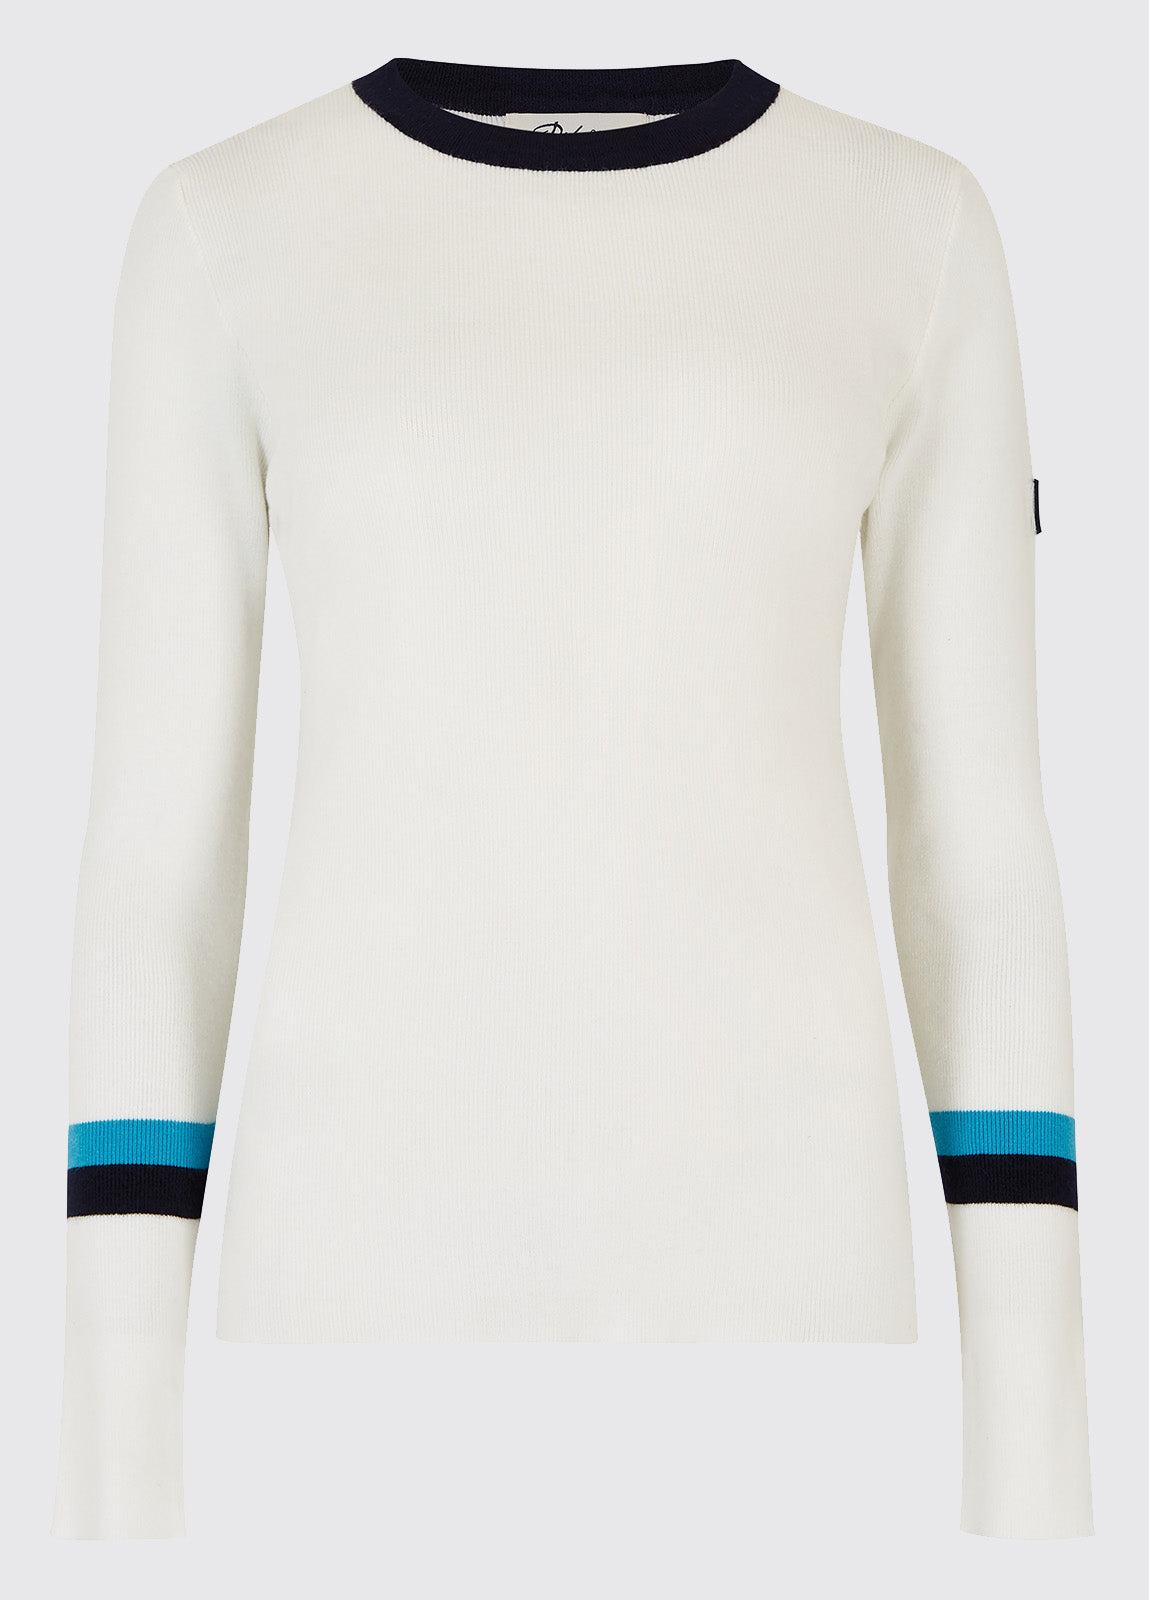 Dubarry Tolka Sweater White Multi (Women's)